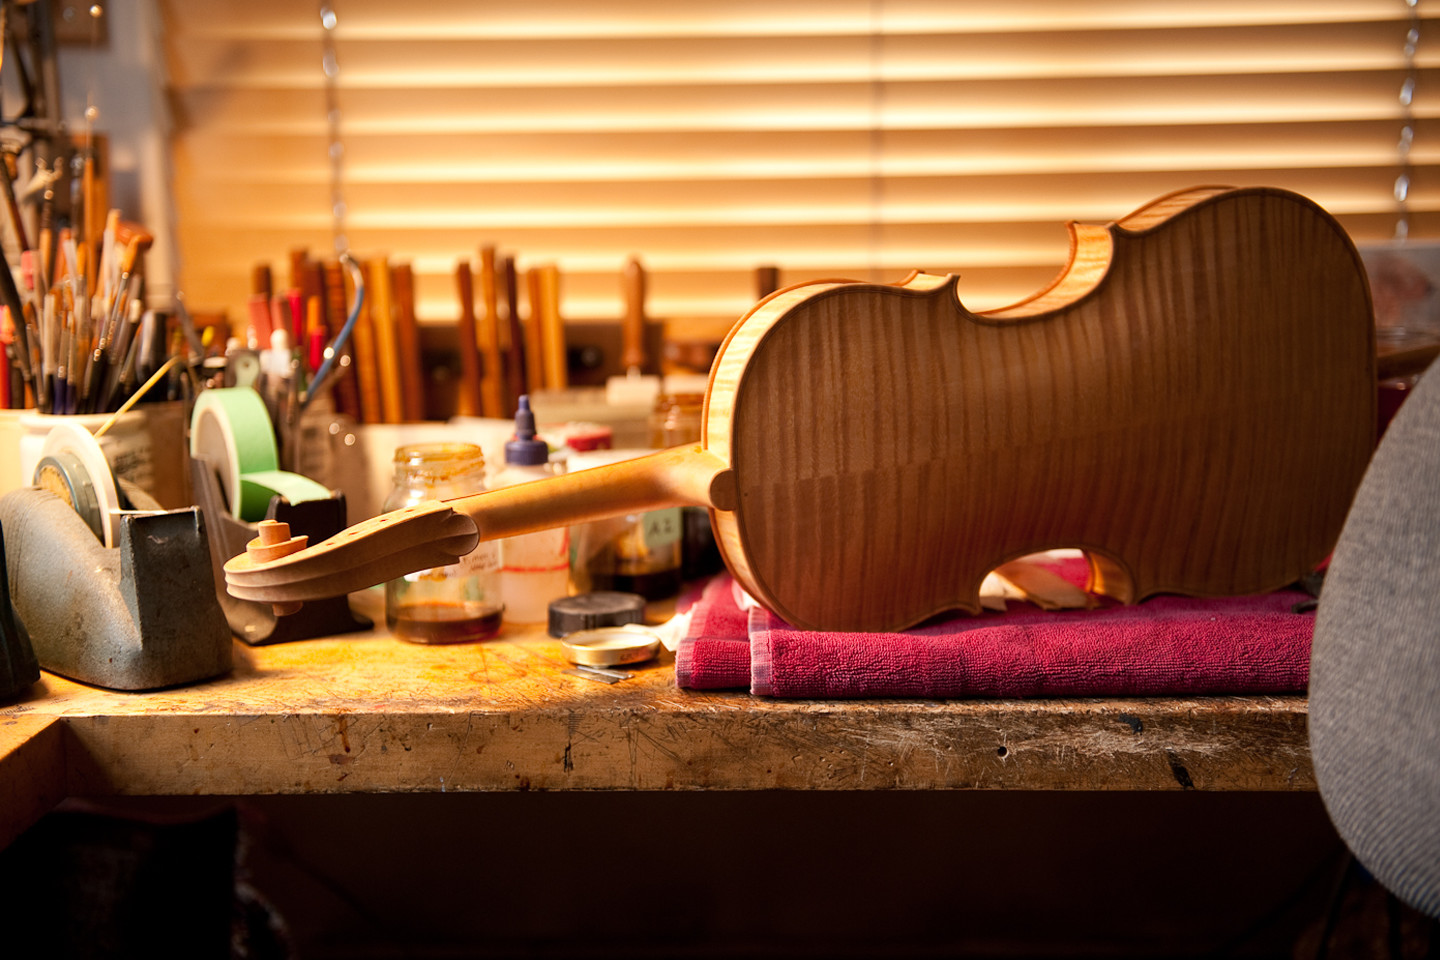 Guy Rabut Luthier